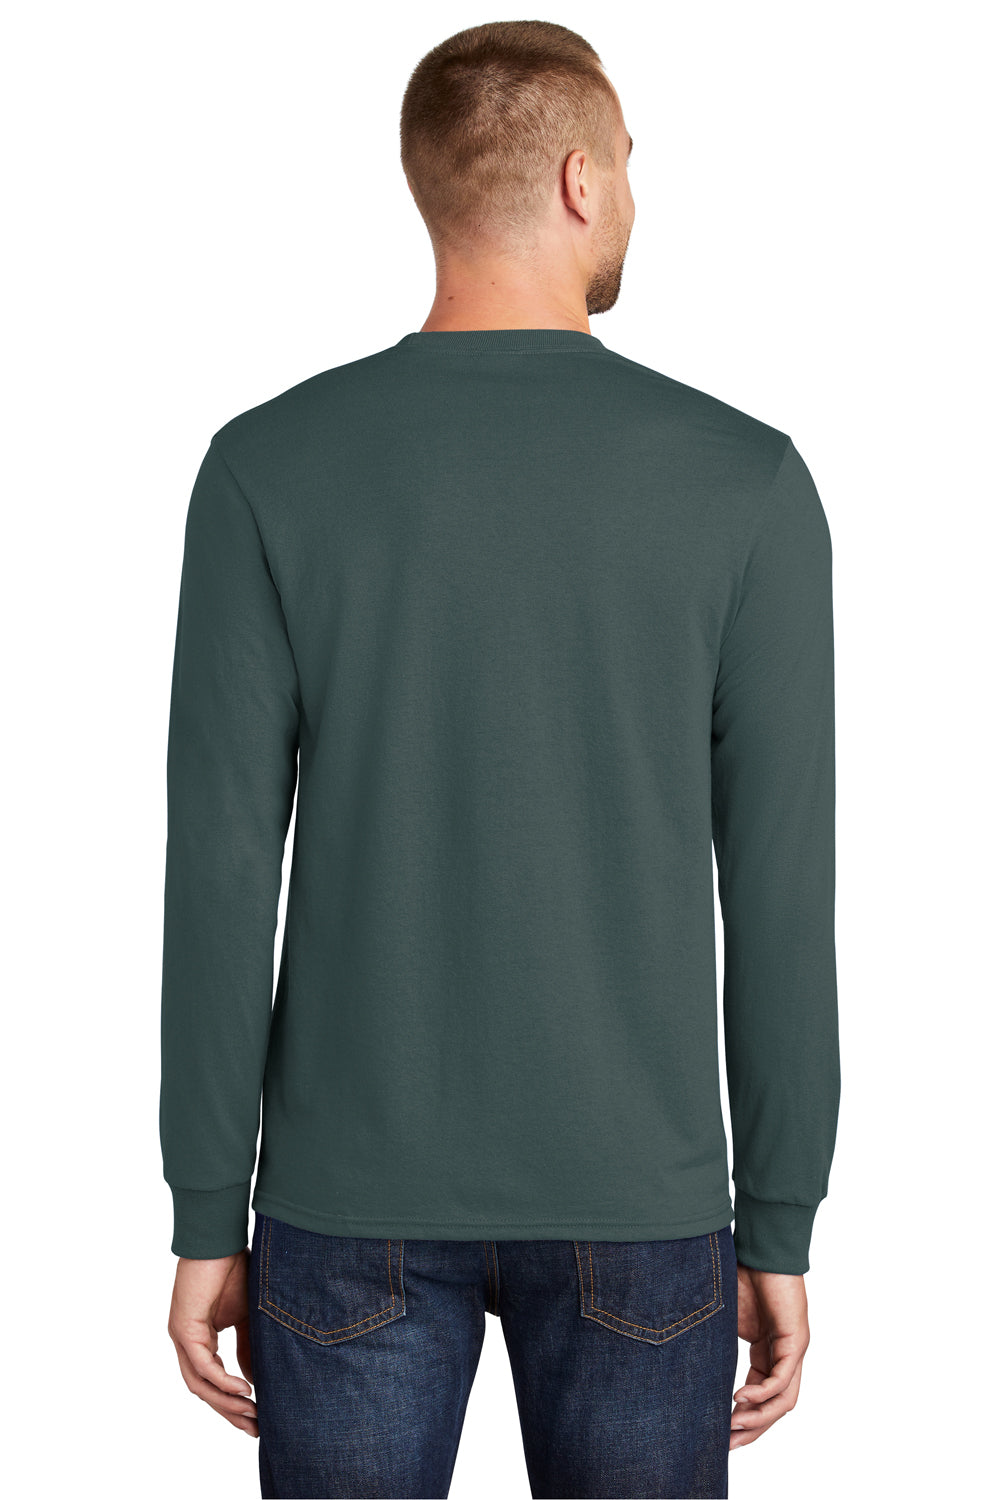 Port & Company PC55LS Mens Core Long Sleeve Crewneck T-Shirt Dark Green Back